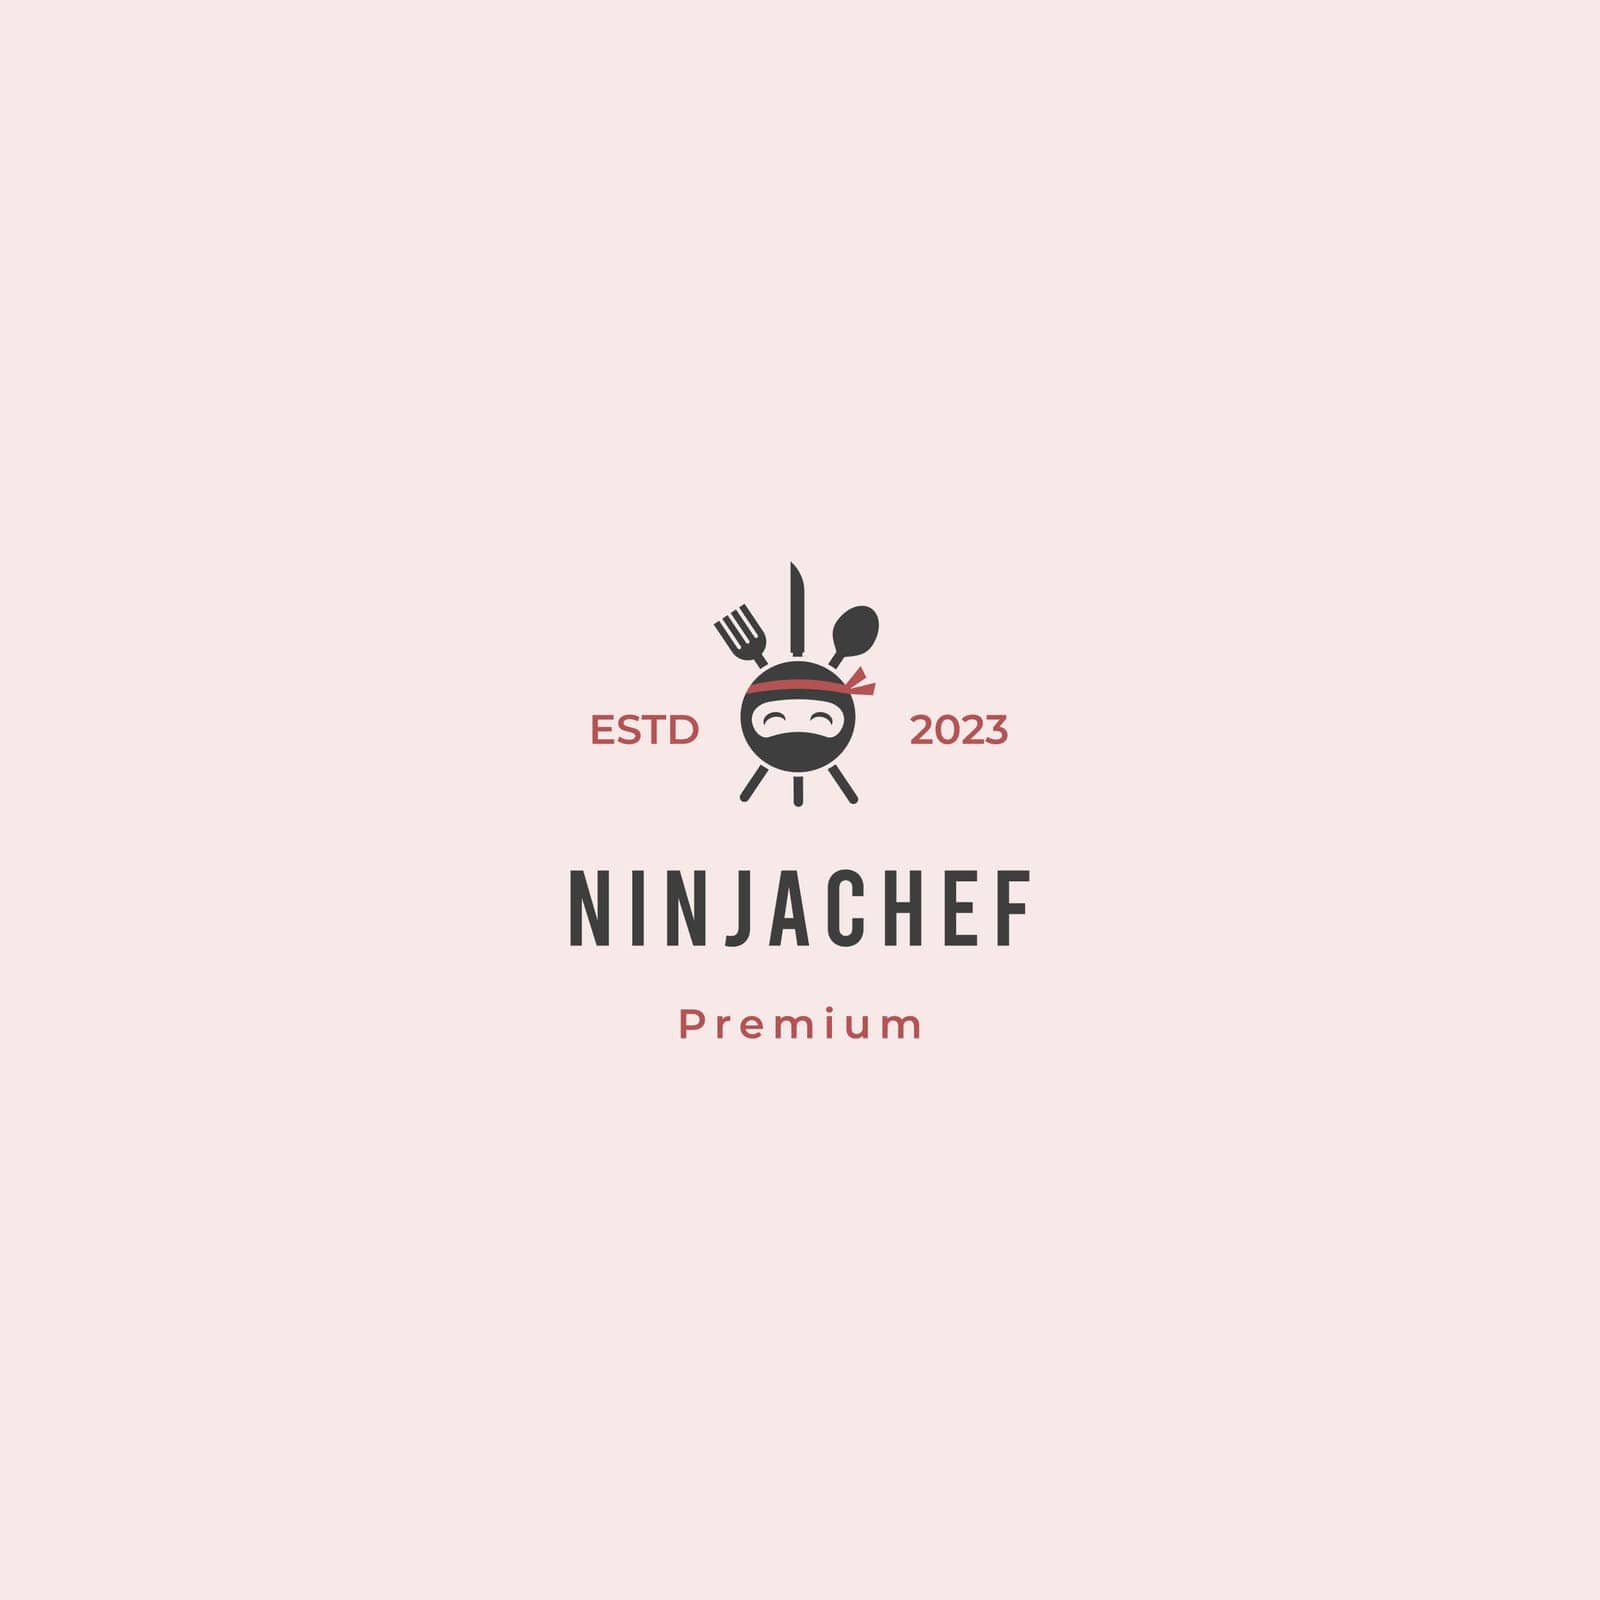 ninja chef logo design vintage concept, ninja with cutlery logo template